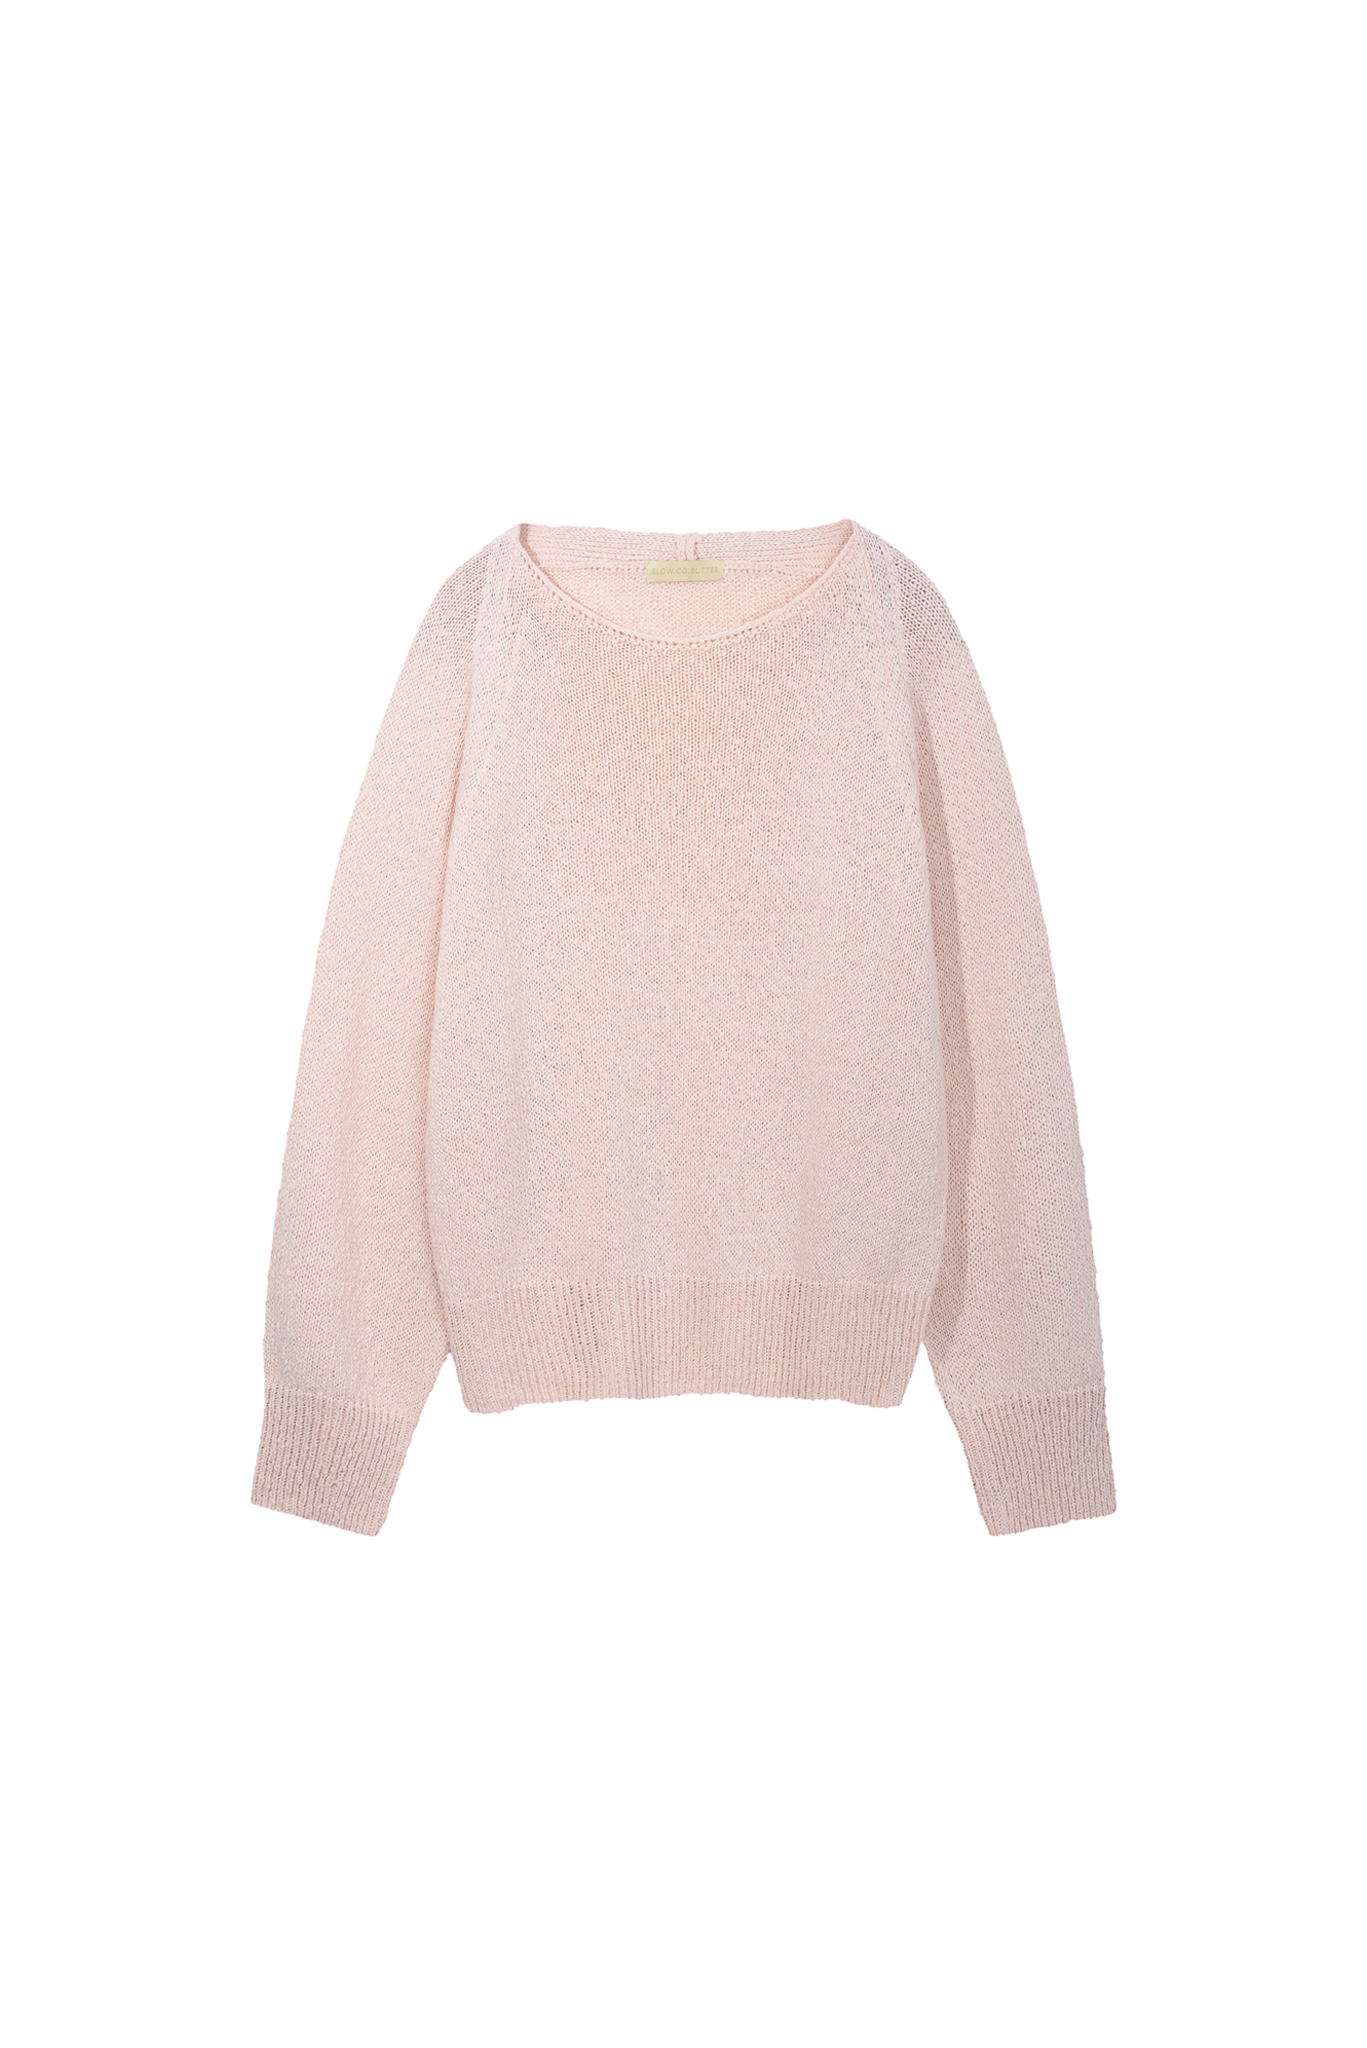 [SLOCO] Natural slub boat neck knit, apricot pink